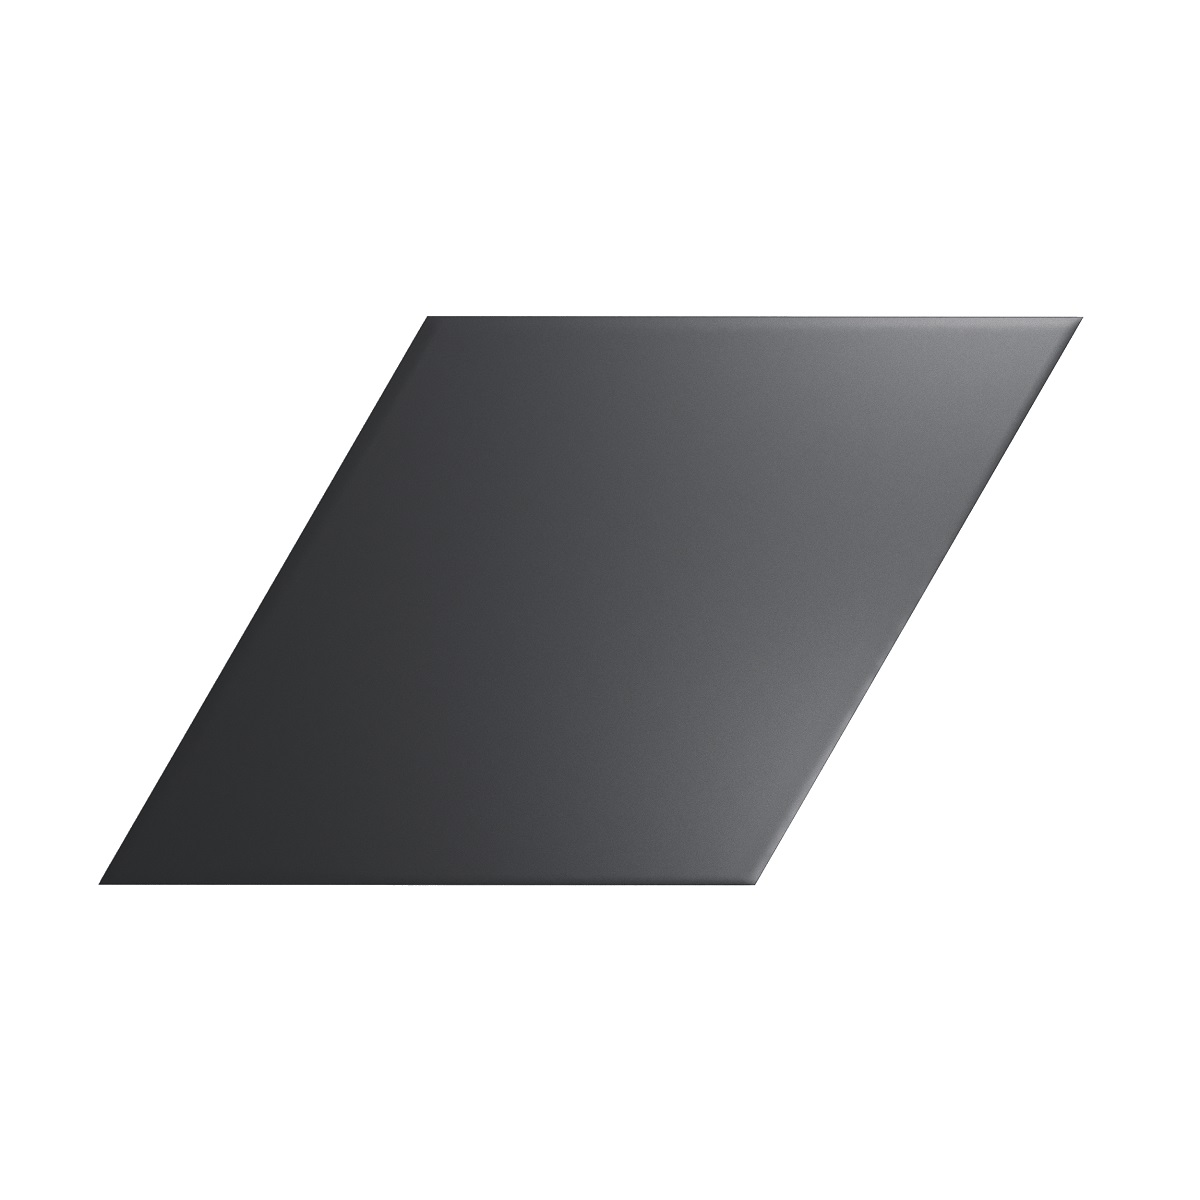 WT-ROMBO AREA BLACK MATT<br />
15x25.9cm